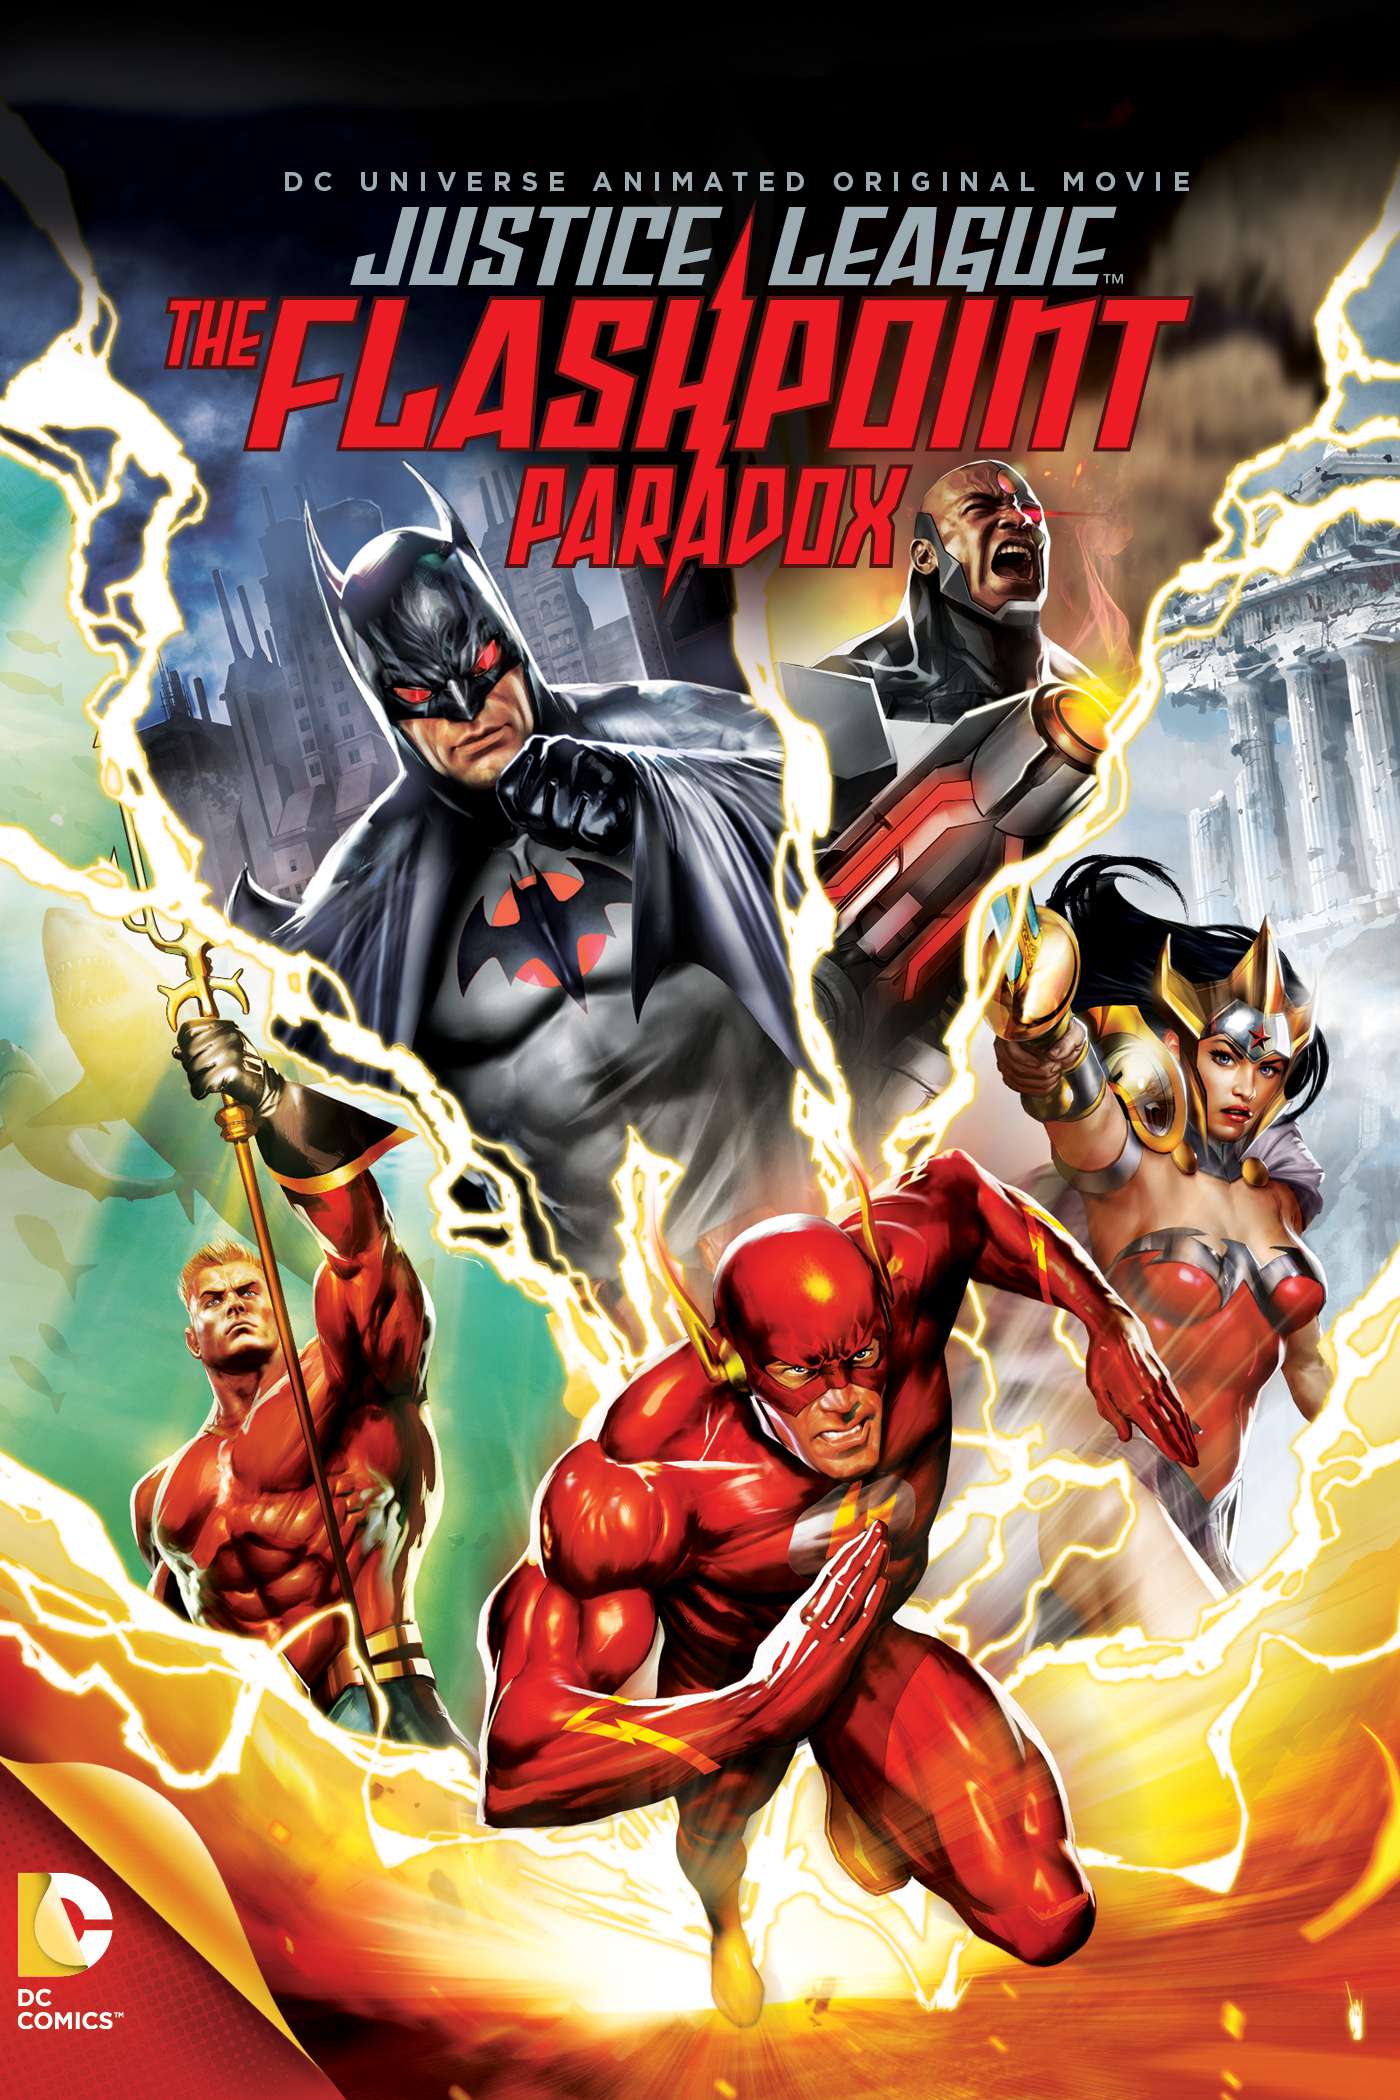 Justice League The Flashpoint Paradox - 2013 DVDRip XviD AC3 - Türkçe Altyazılı indir